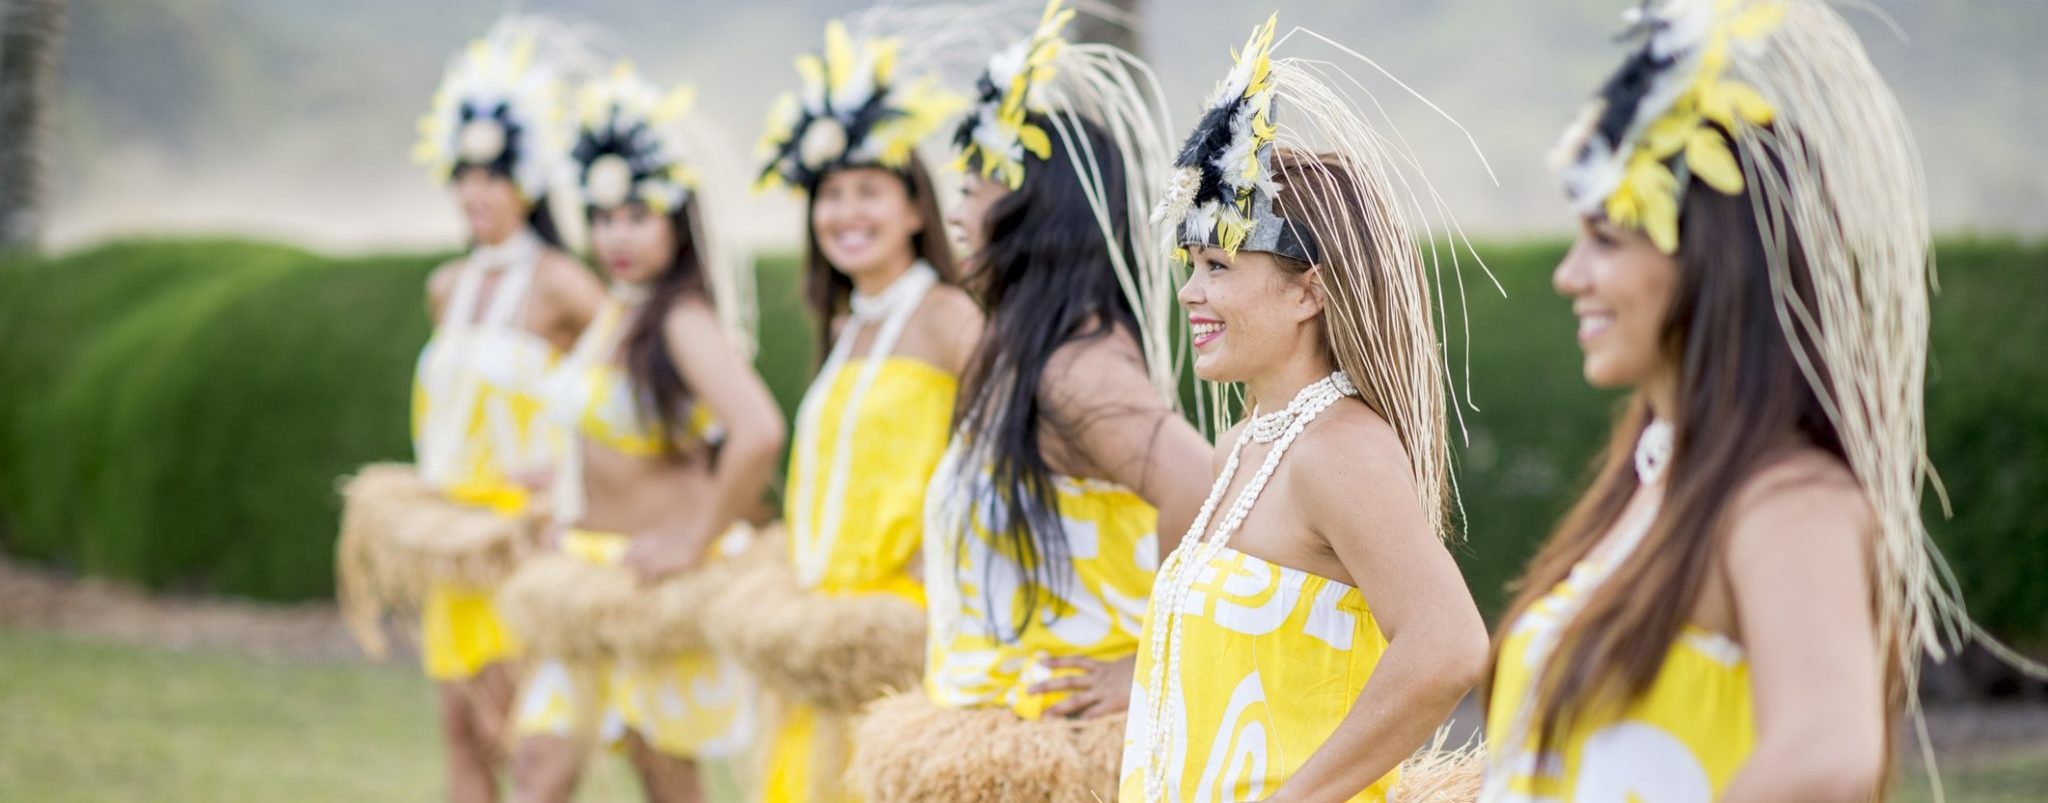 A group of women doing a traditional Hawaiian dance during a luau, Hawaii.